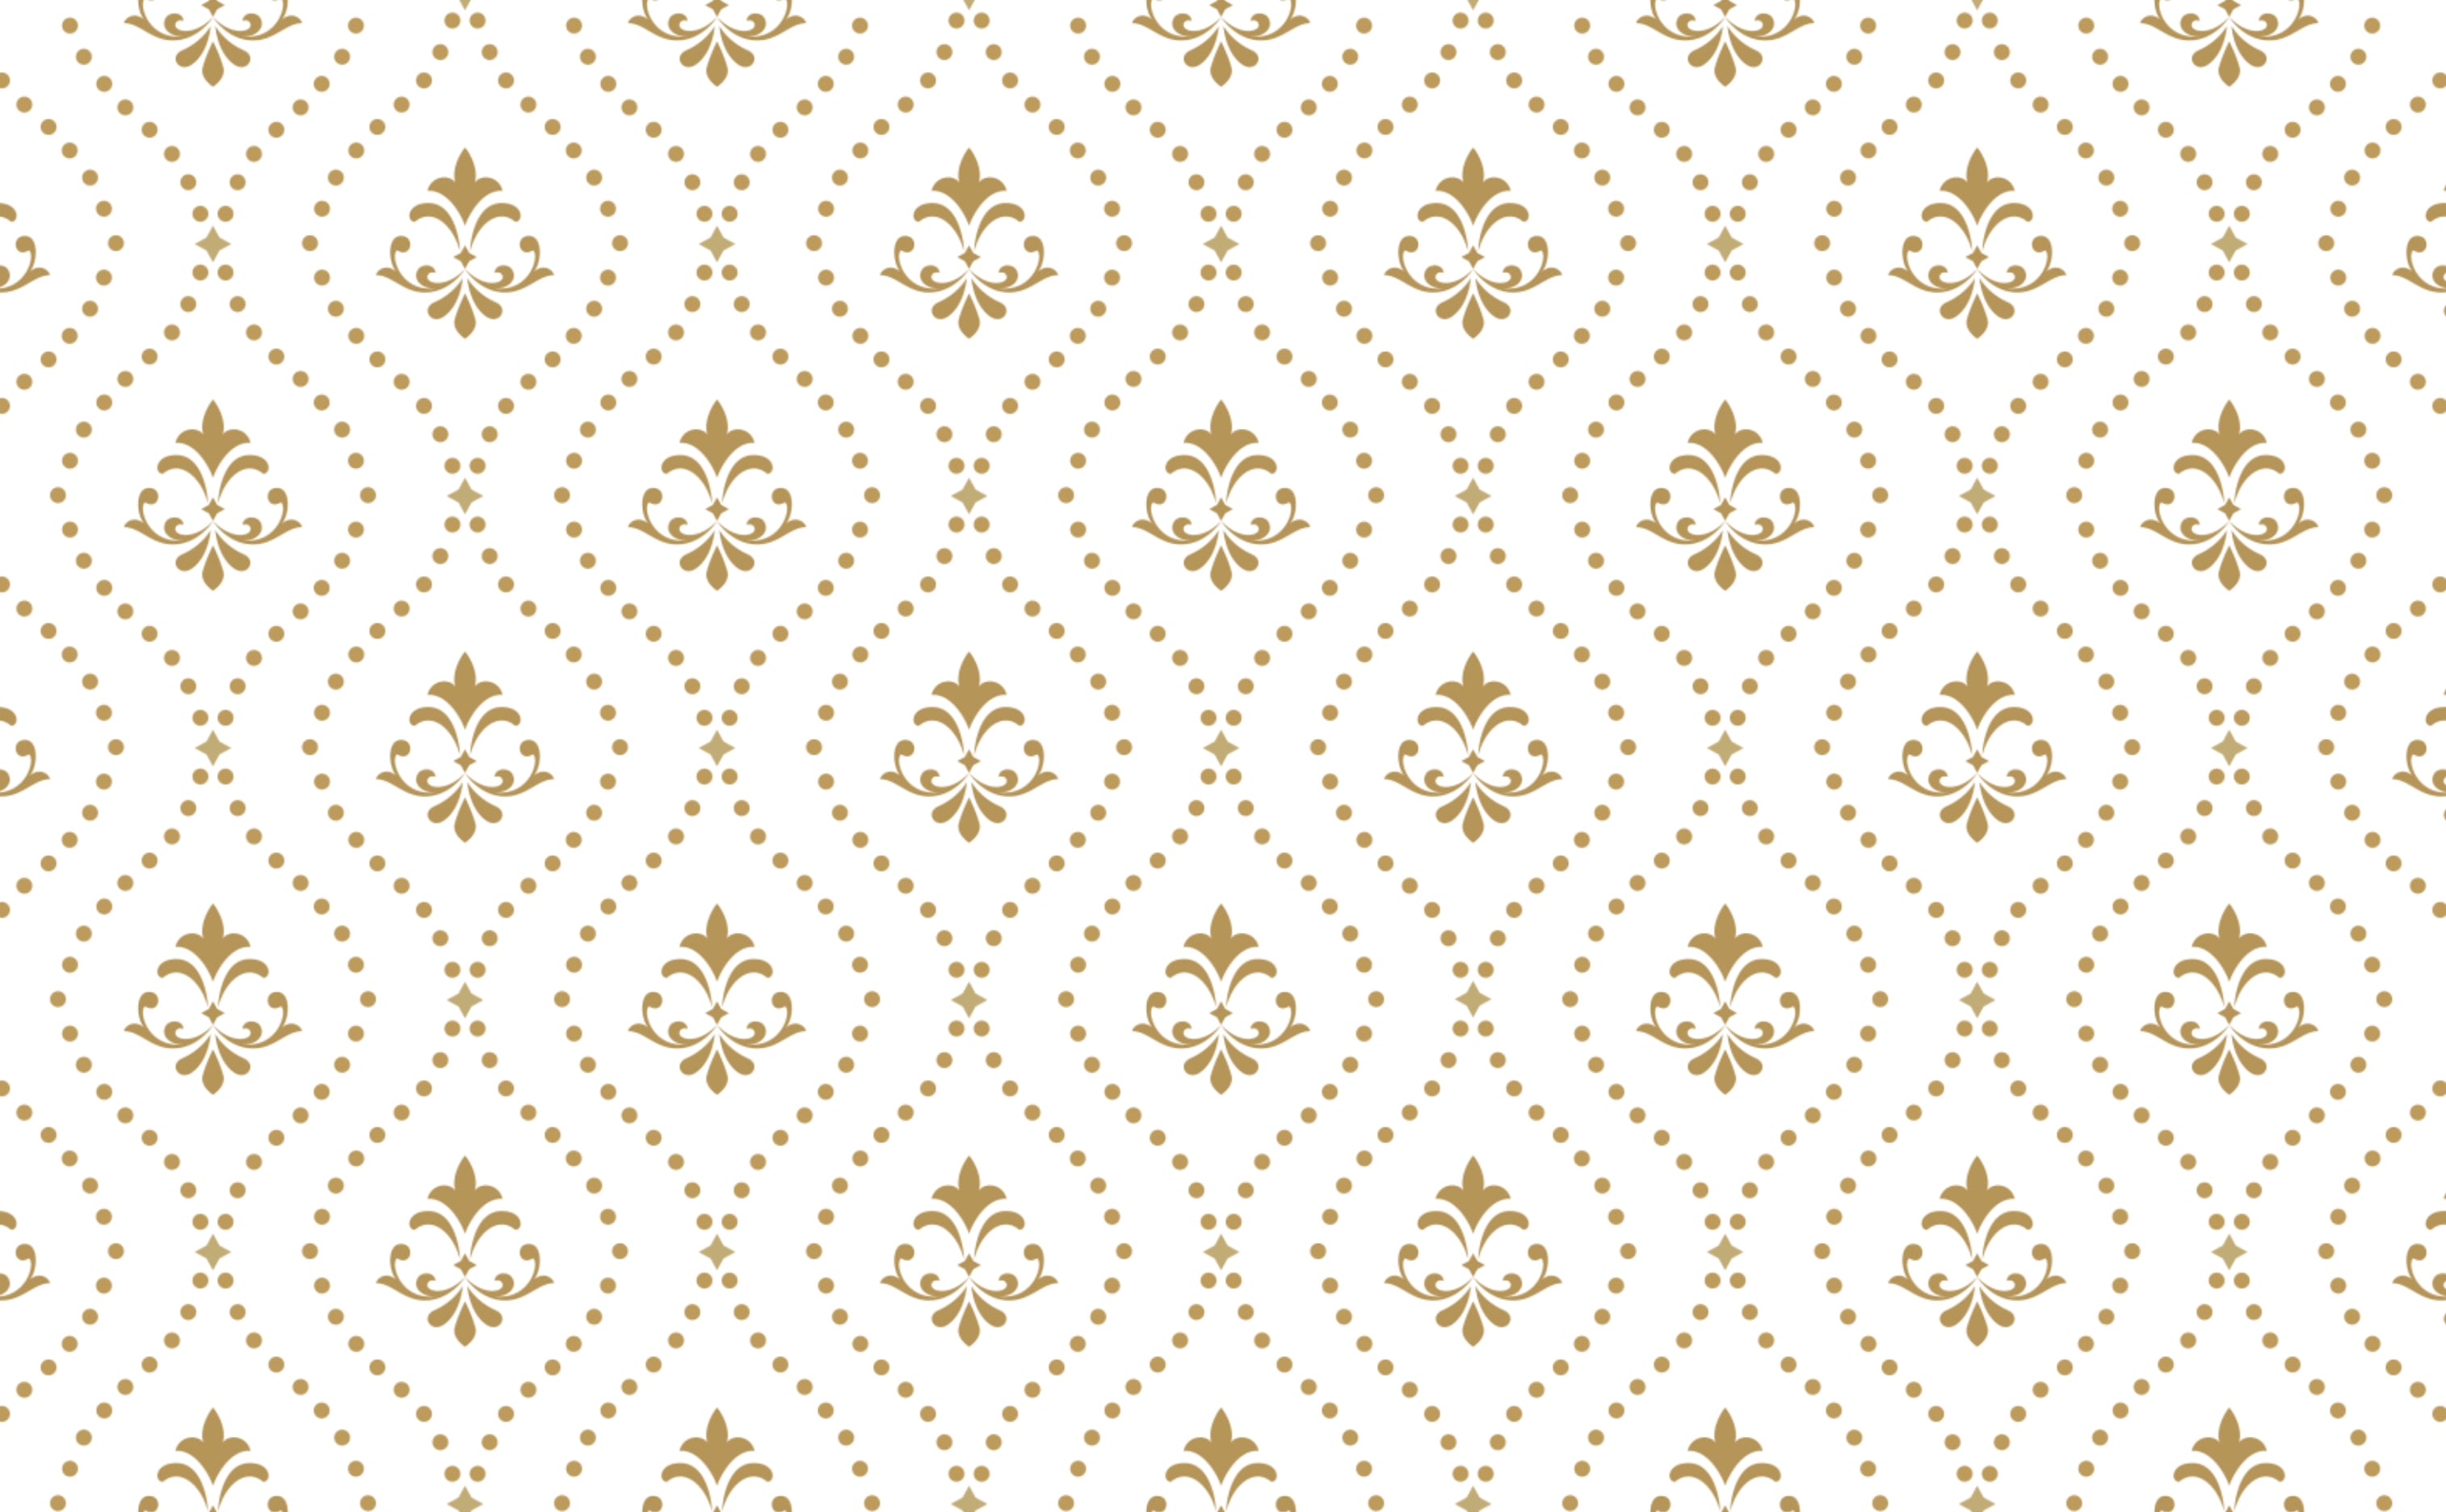 Royal heraldic Lilies Fleurdelis  wallpaper background seamless  pattern Stock Vector Image  Art  Alamy